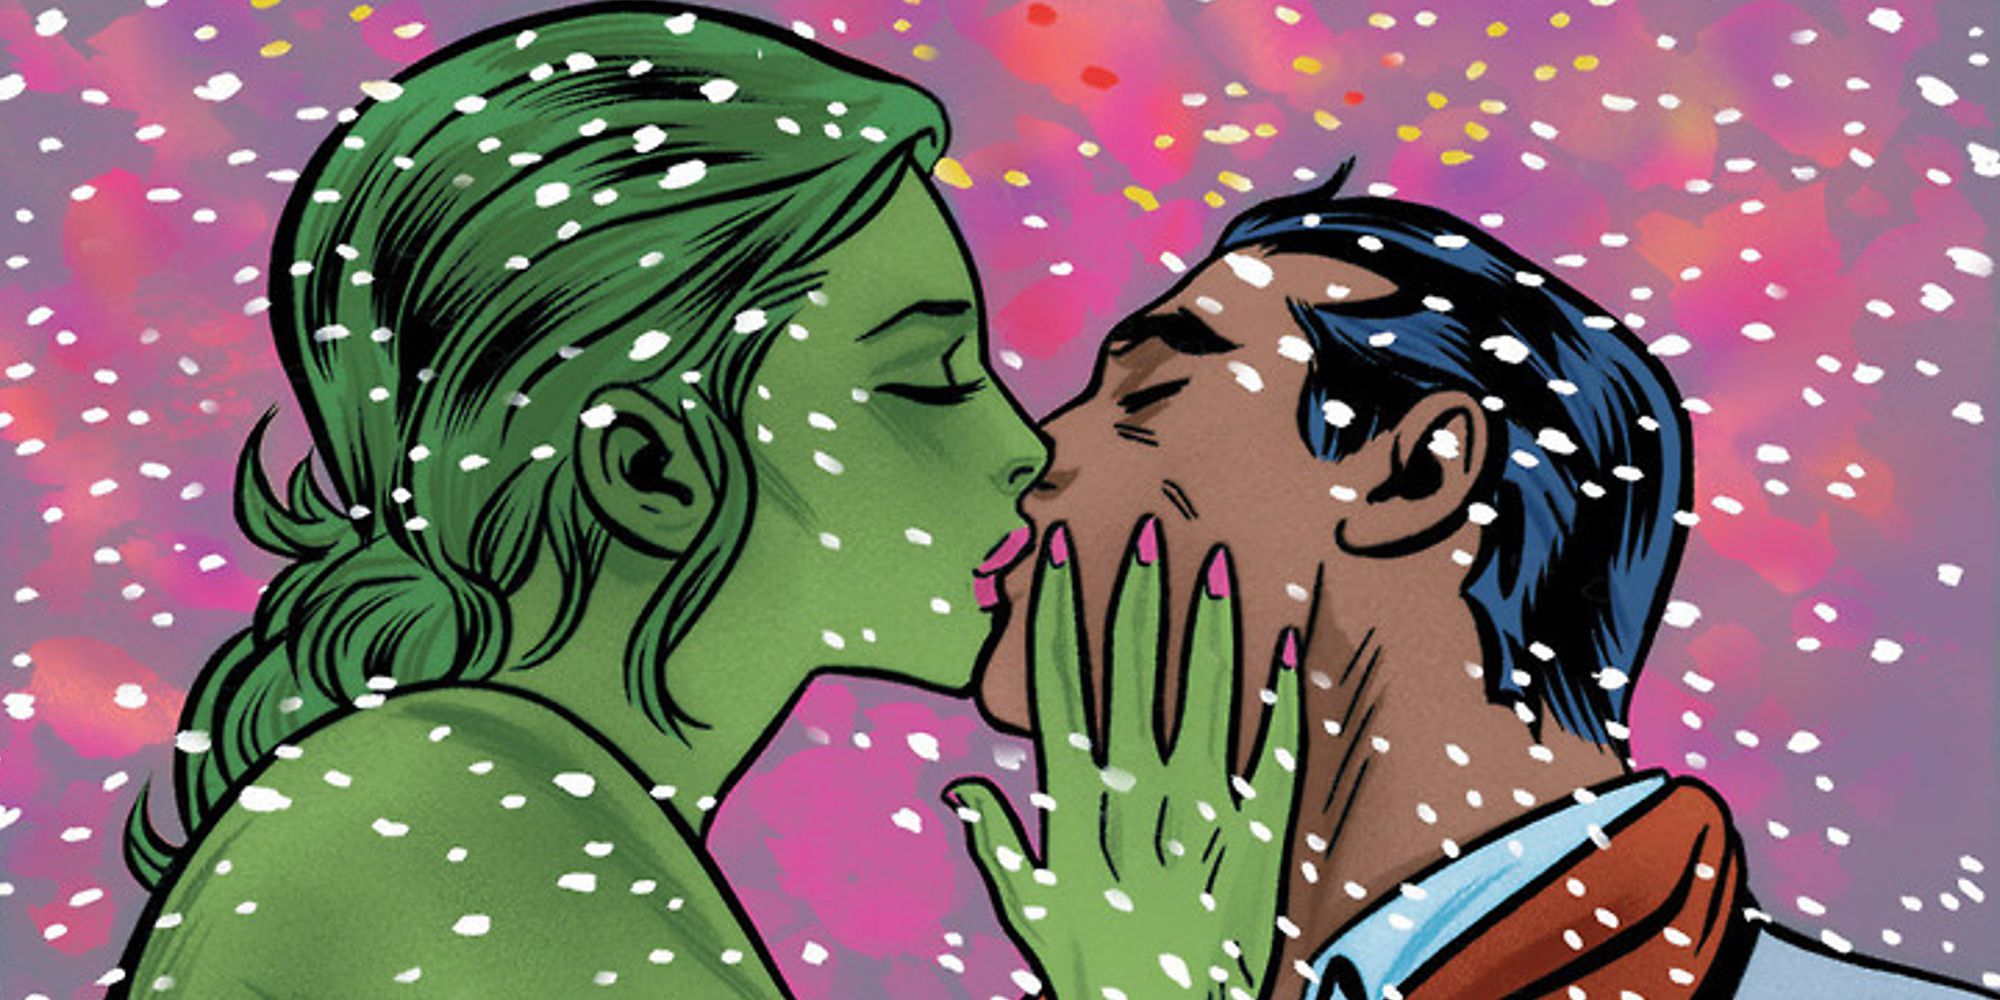 She-Hulk and Wyatt Wingfott kissing in the snow in FF